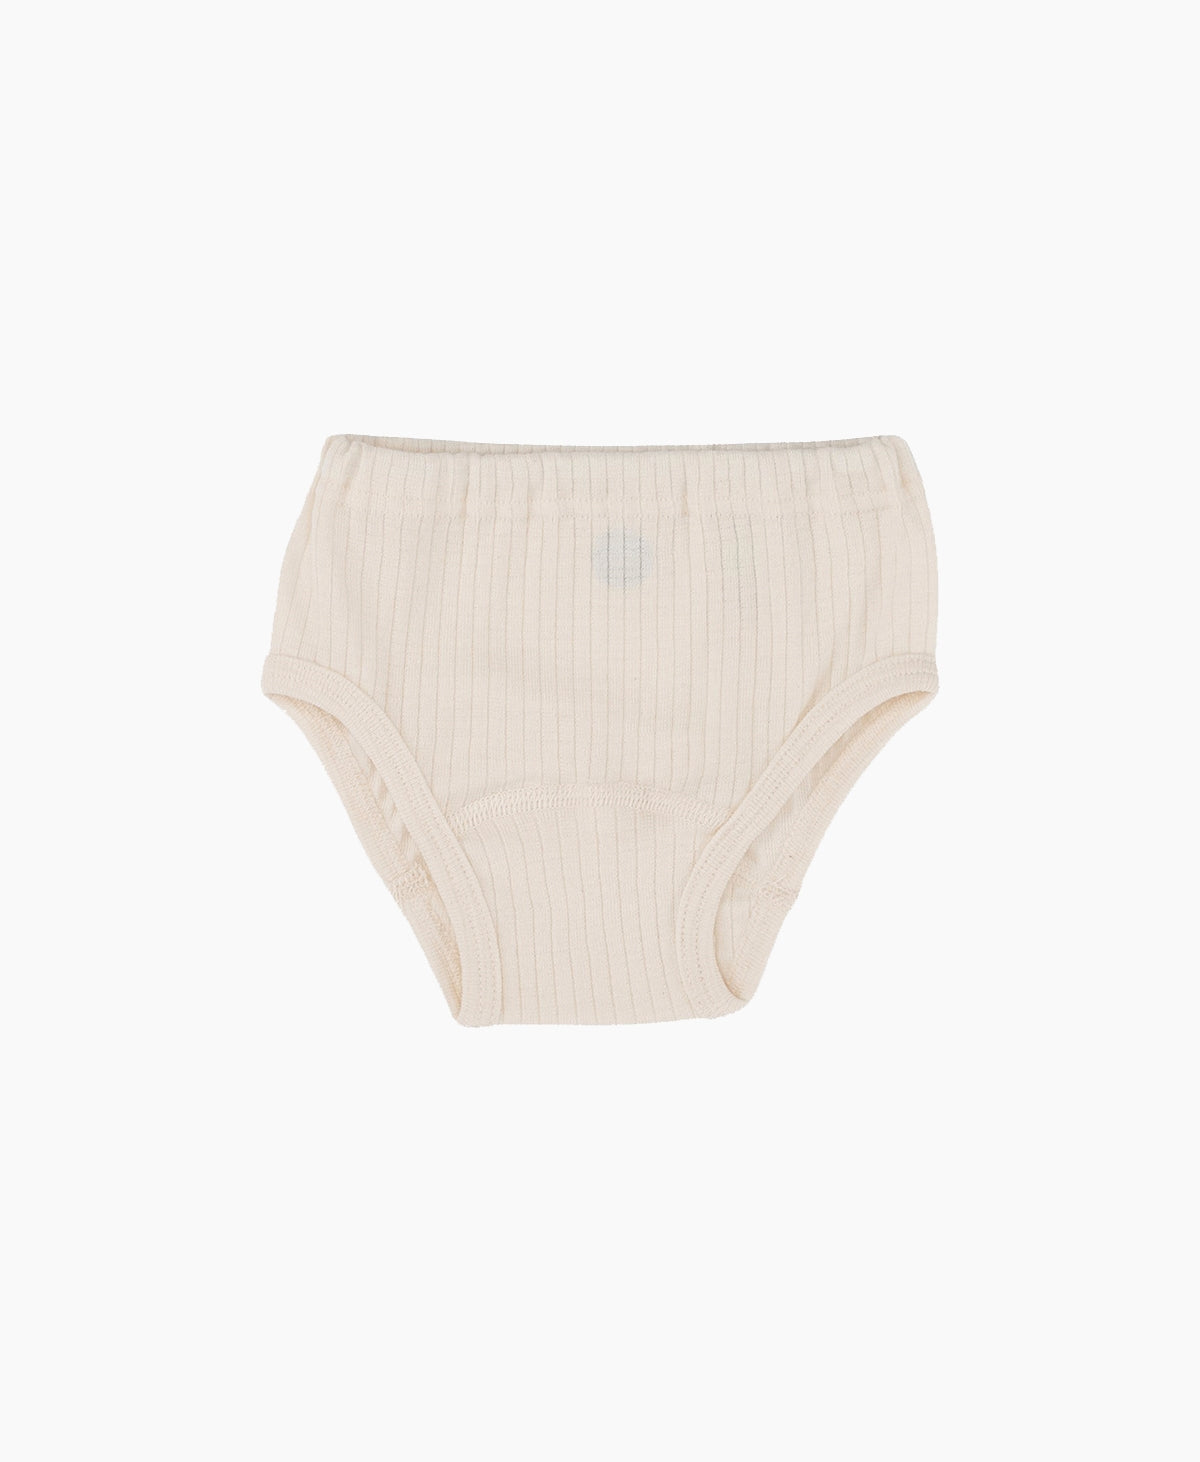 Cosilana - Underpants - Off-white